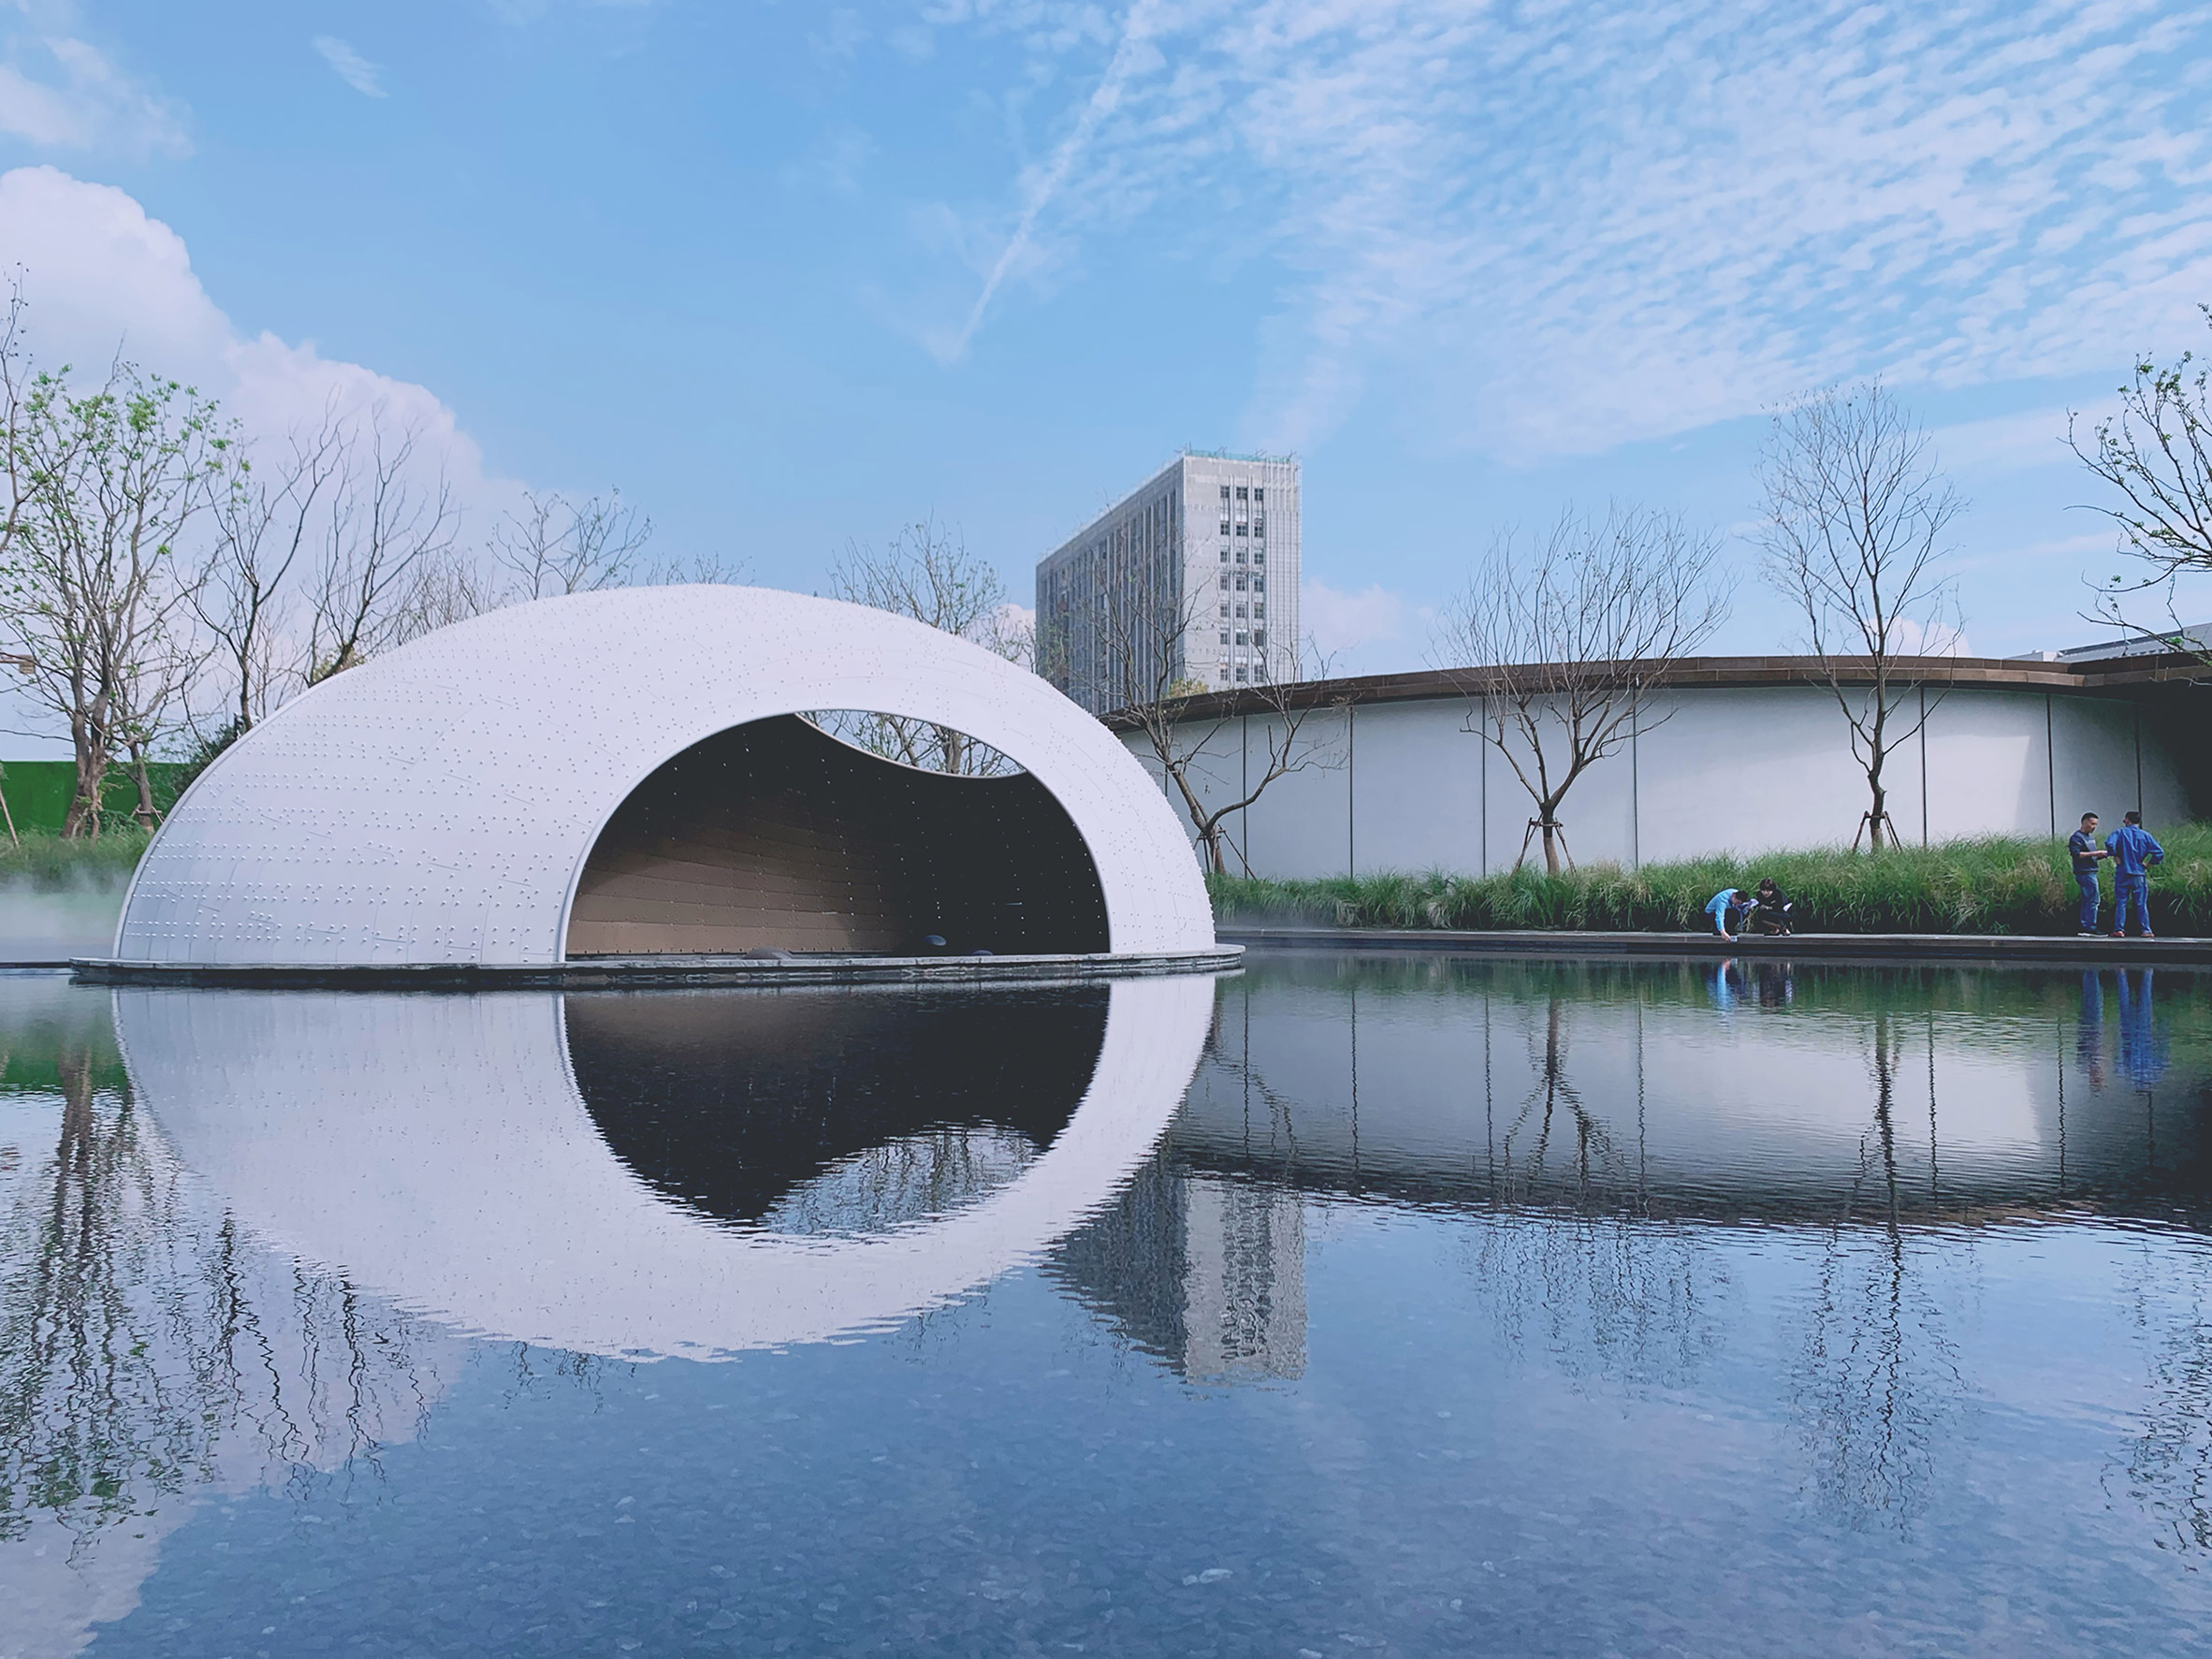 Eggshell-like pavilion in China